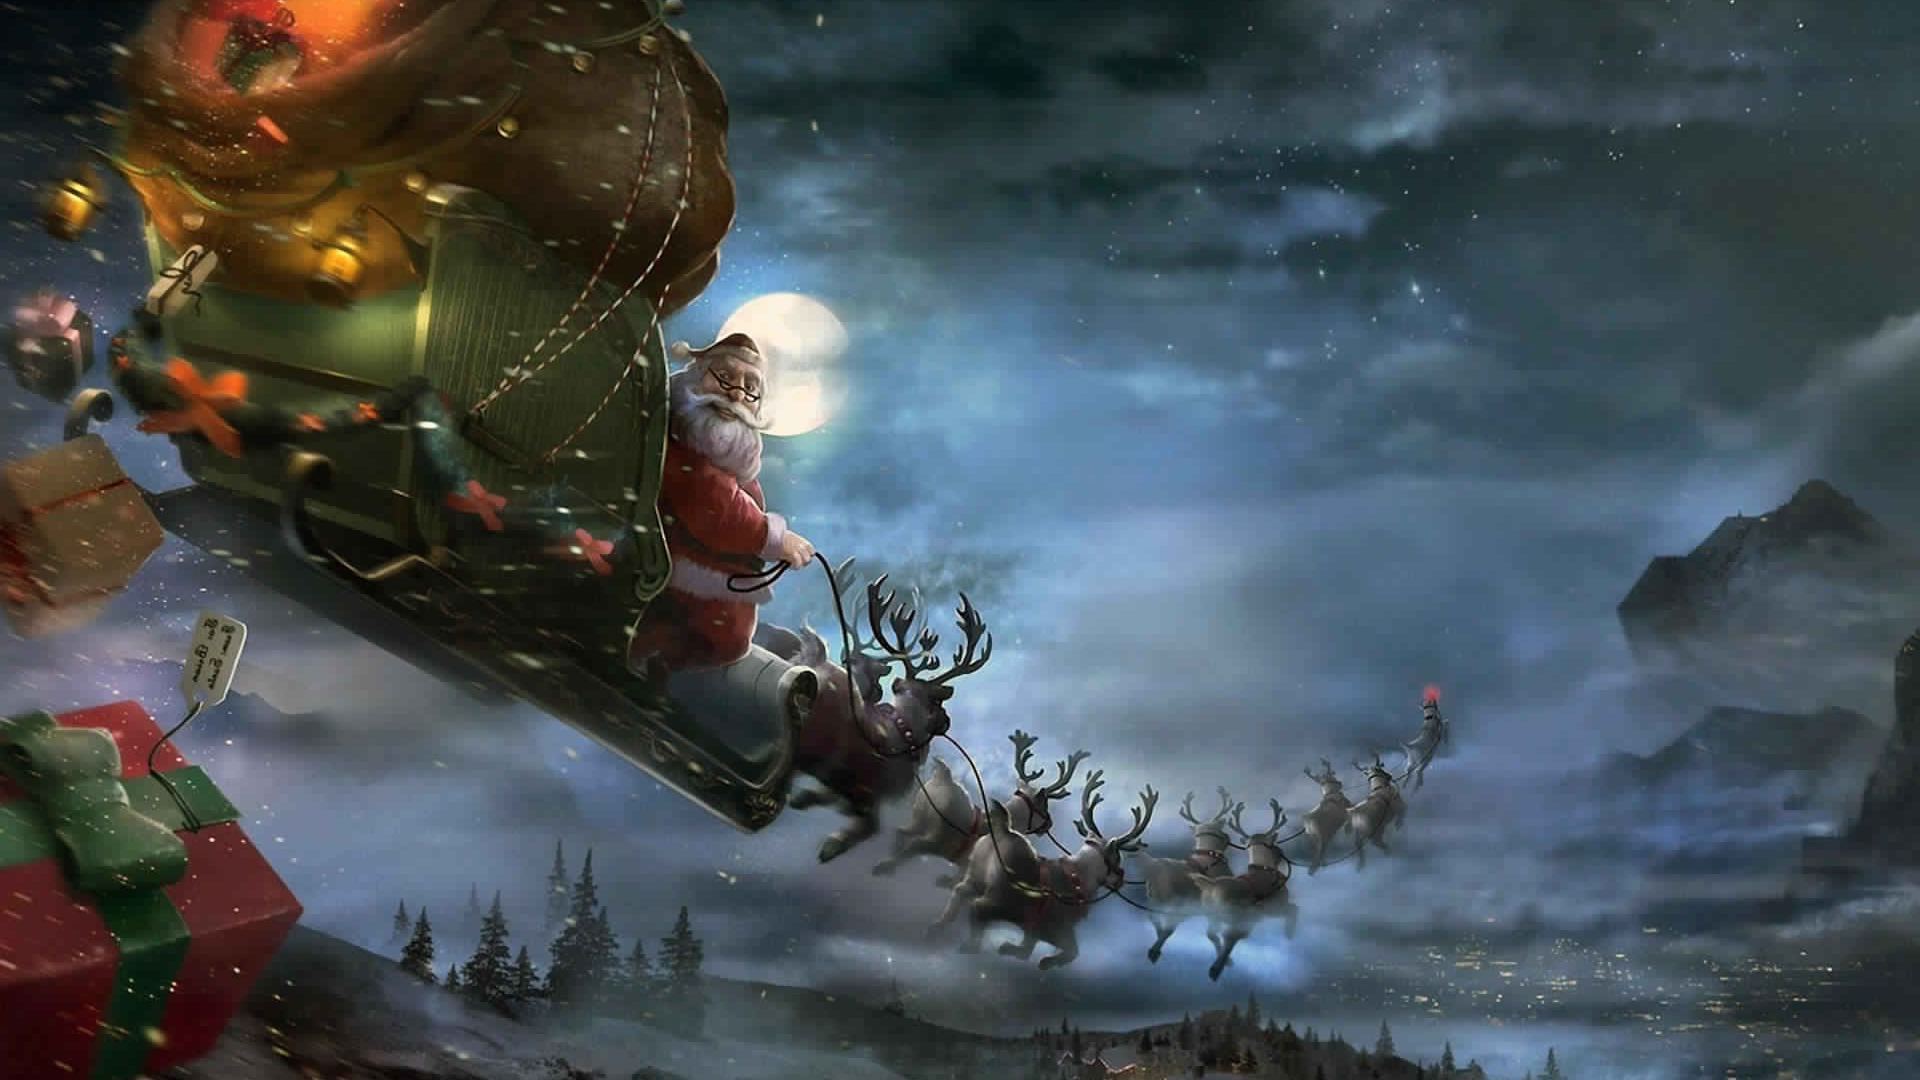 Download Free Santa Claus Desktop Wallpaper